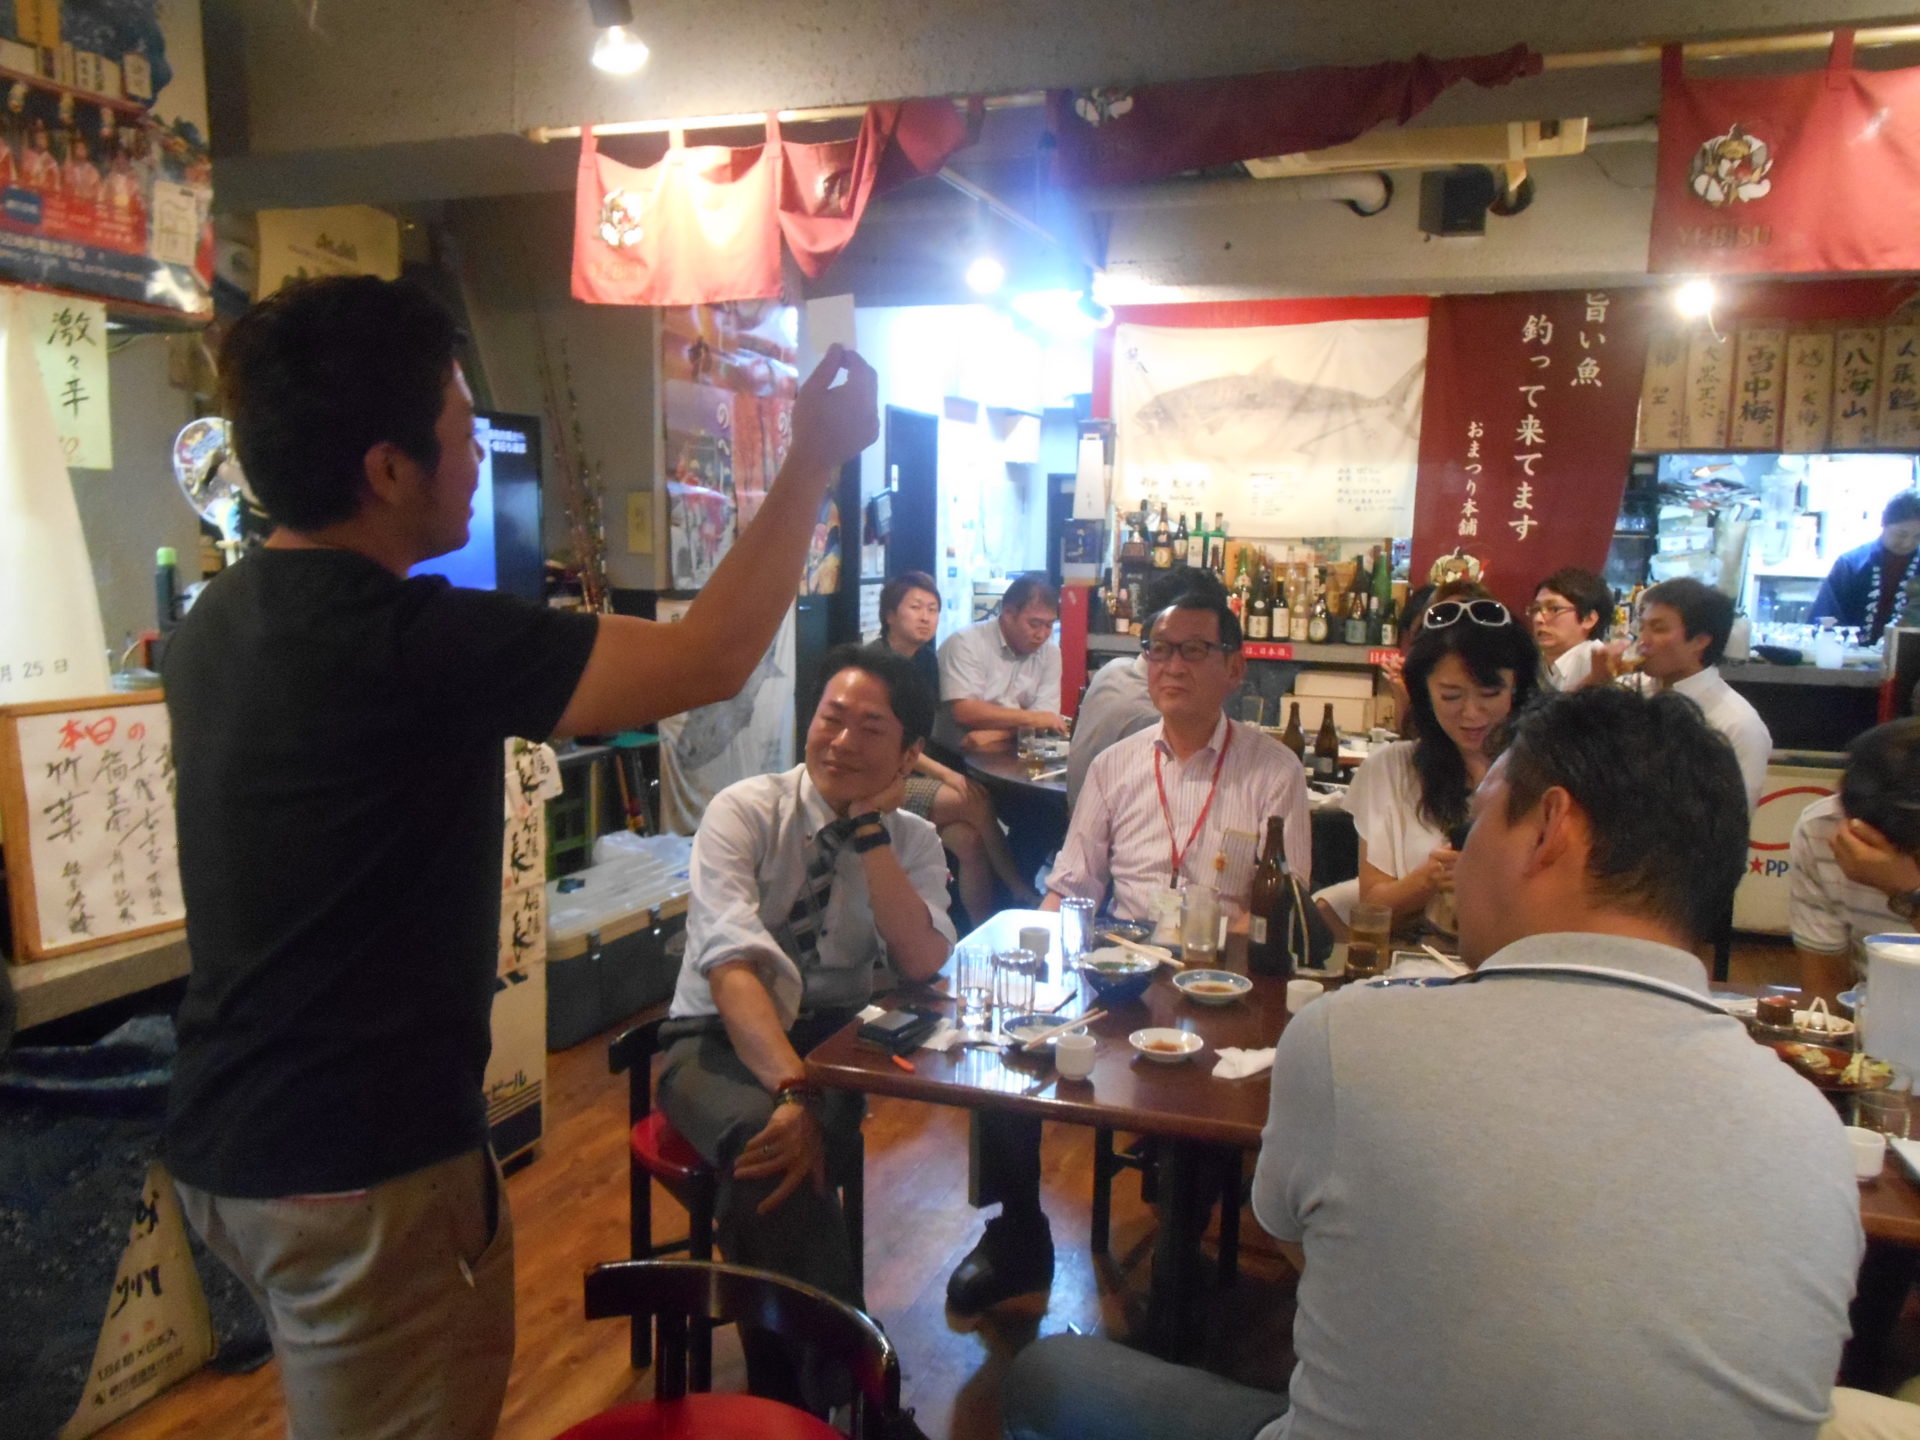 DSCN5647 1920x1440 - 2015年9月14日 AOsuki定例飲み会開催しました。